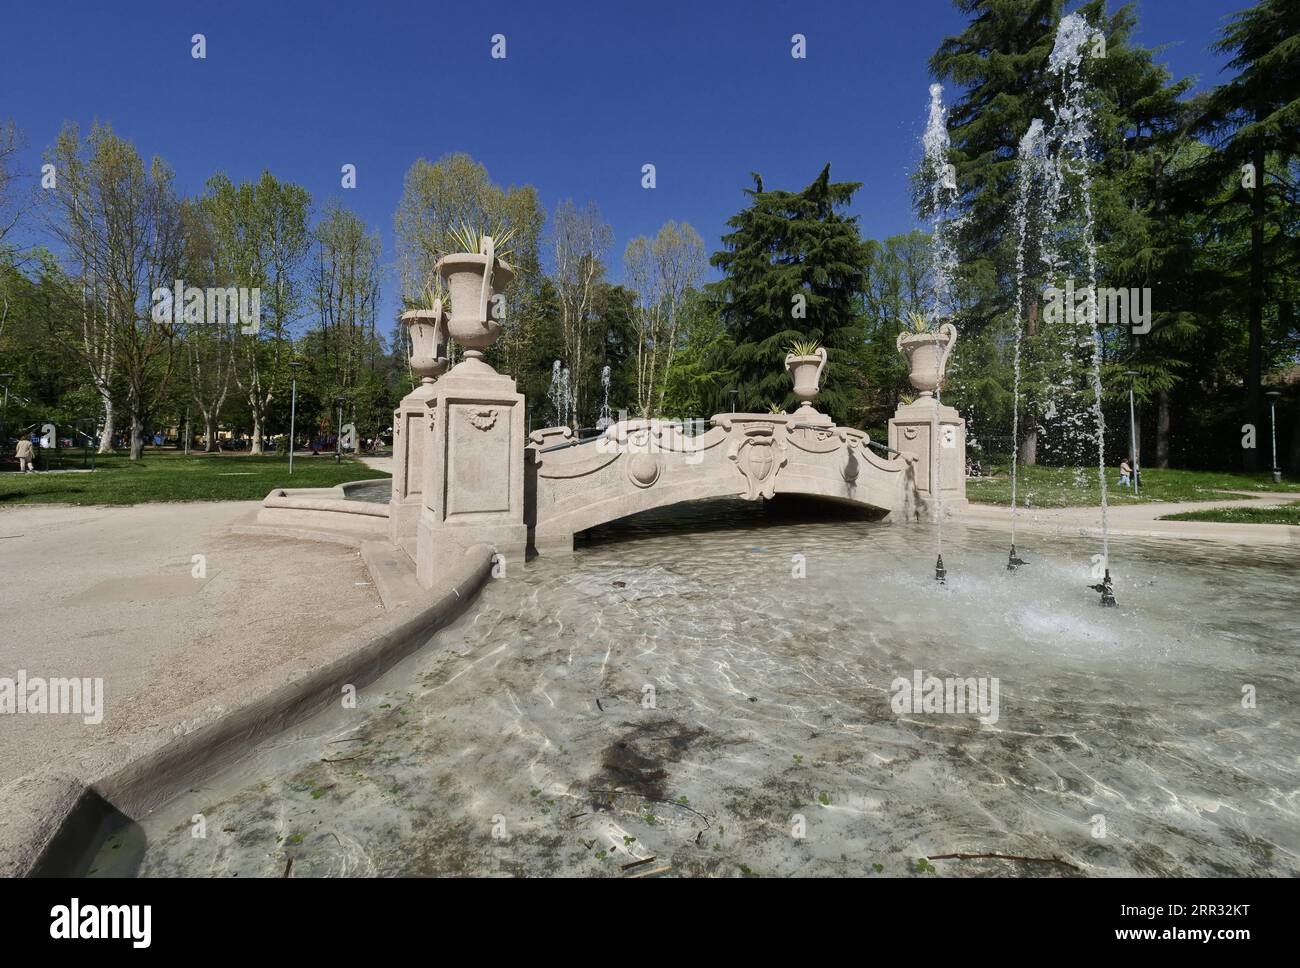 Fountain in Allea park, Novara, Piedmont, Italy Stock Photo